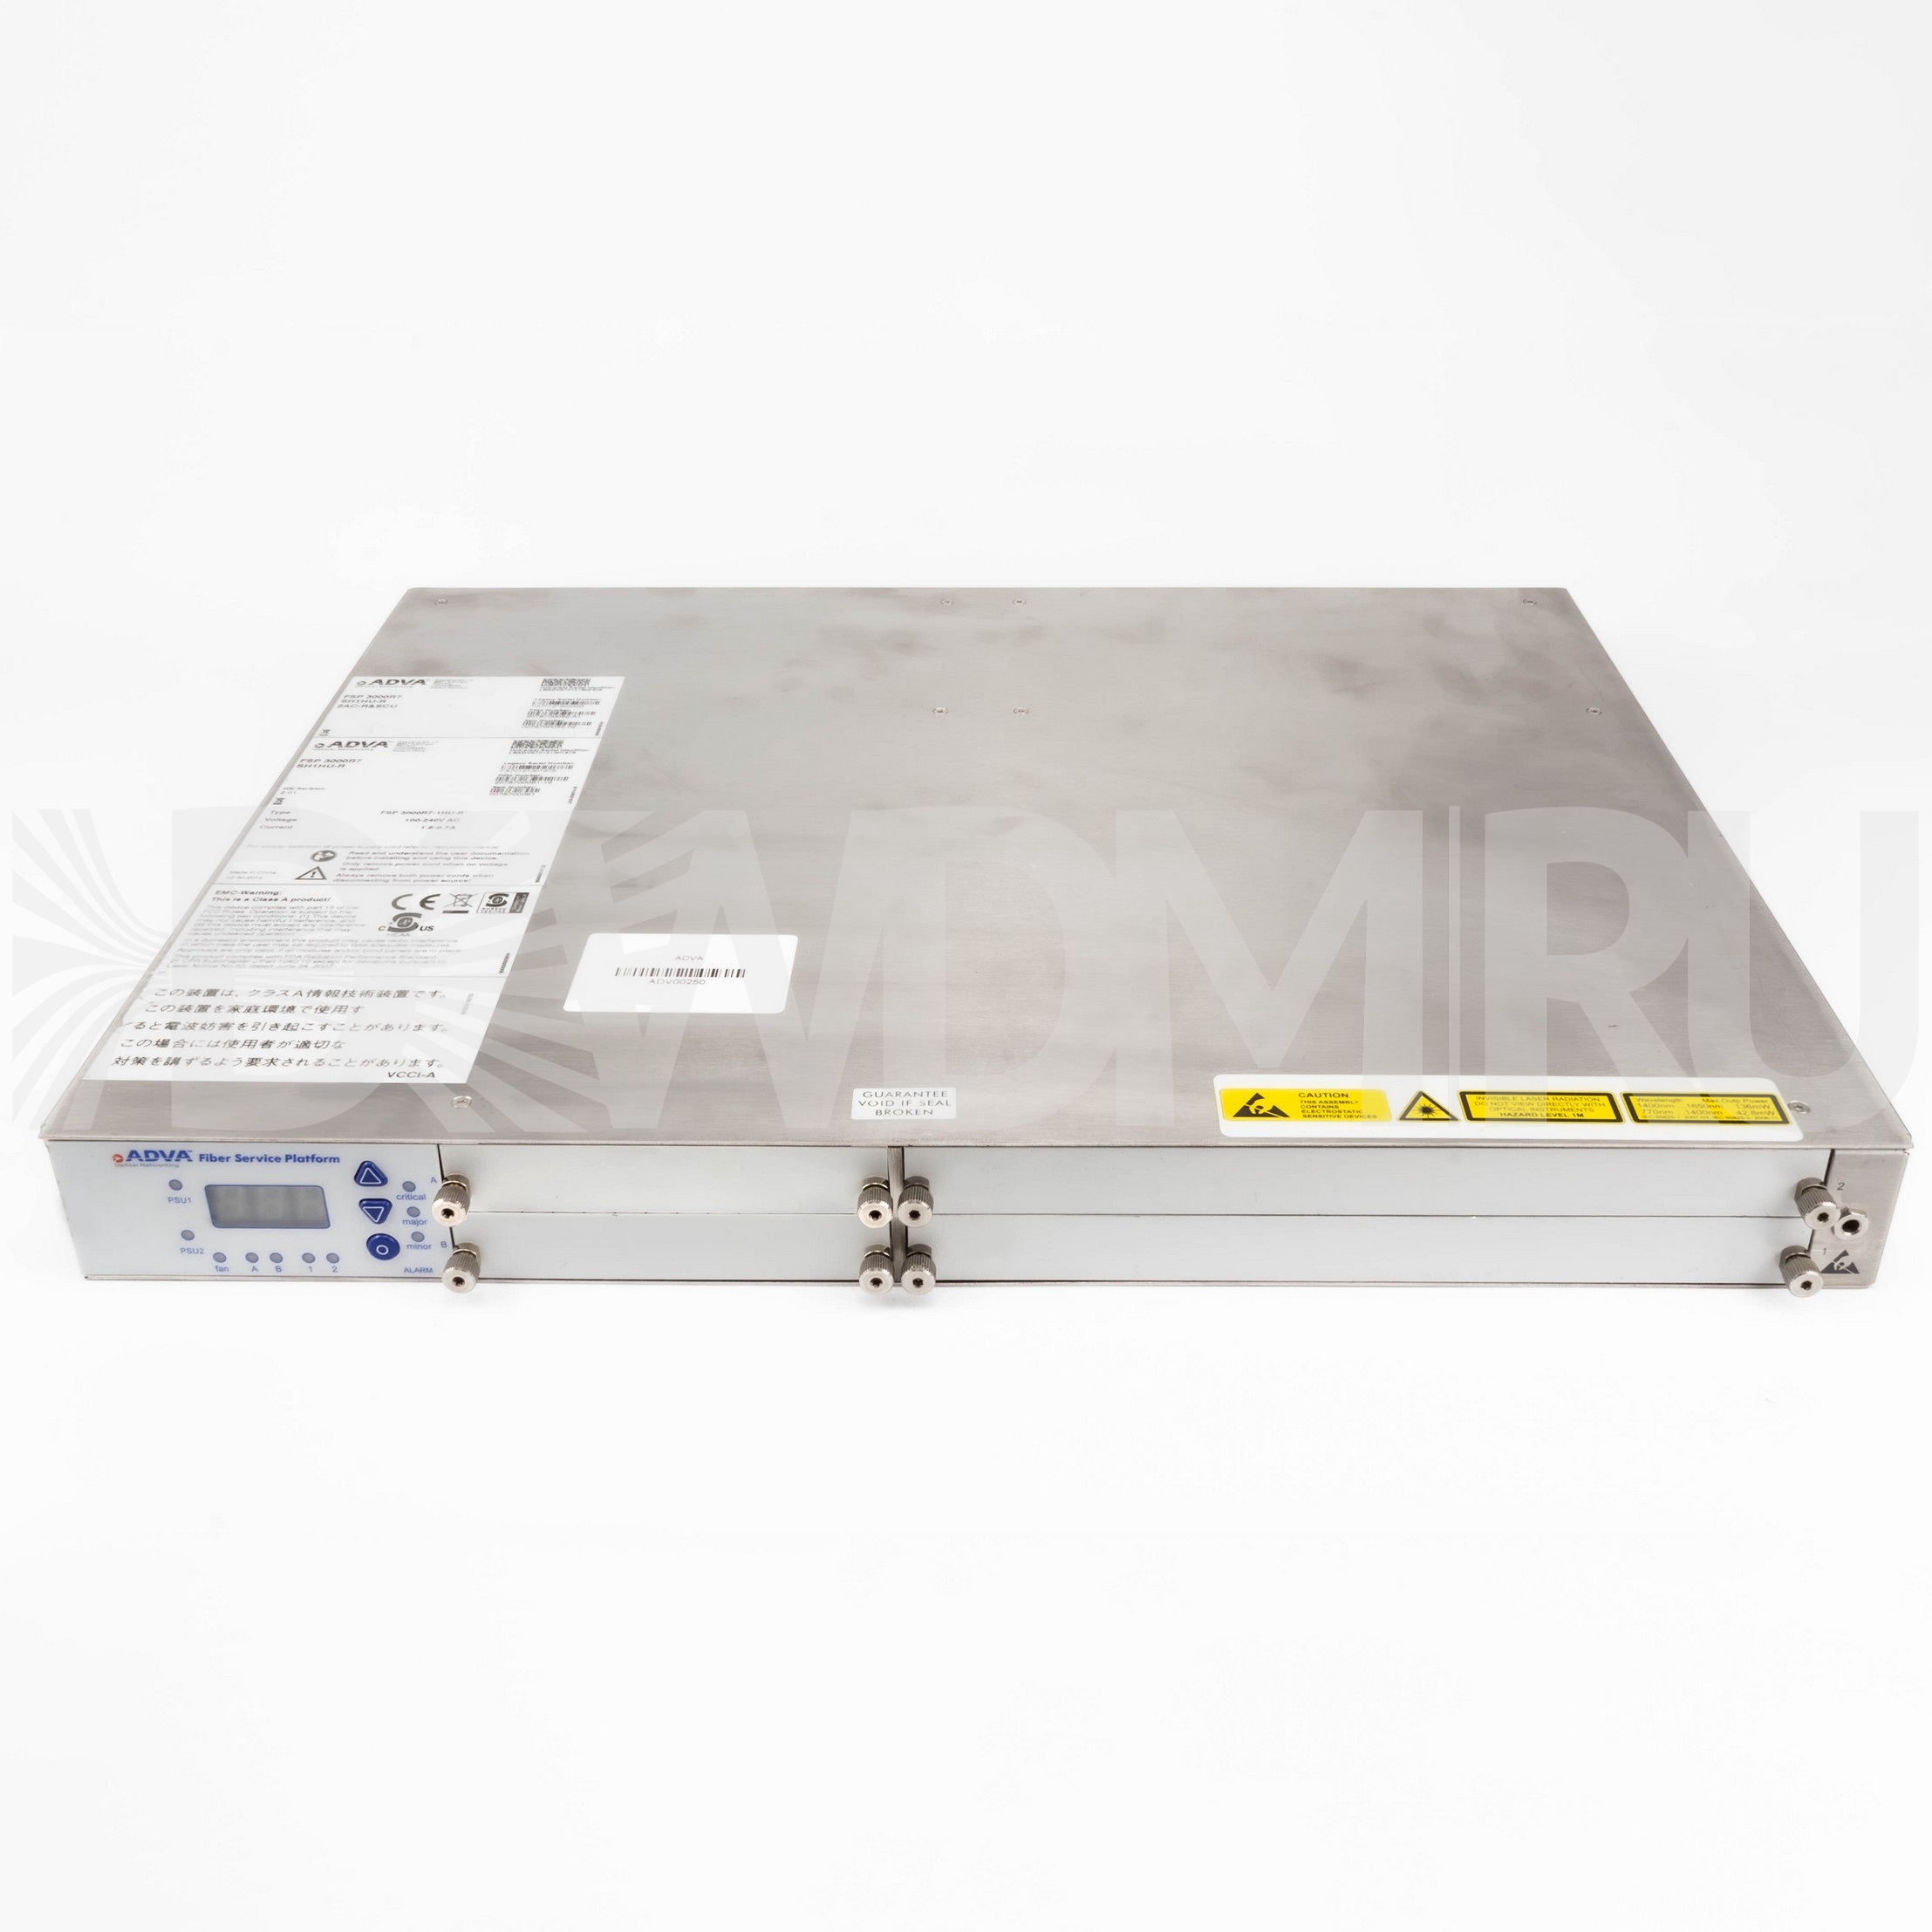 Модульное шасси 1 юнит ADVA Optical FSP3000 SH1HU-R 1HU Slimline Shelf for rear access power supply modules ADVA Optical pn0078700061